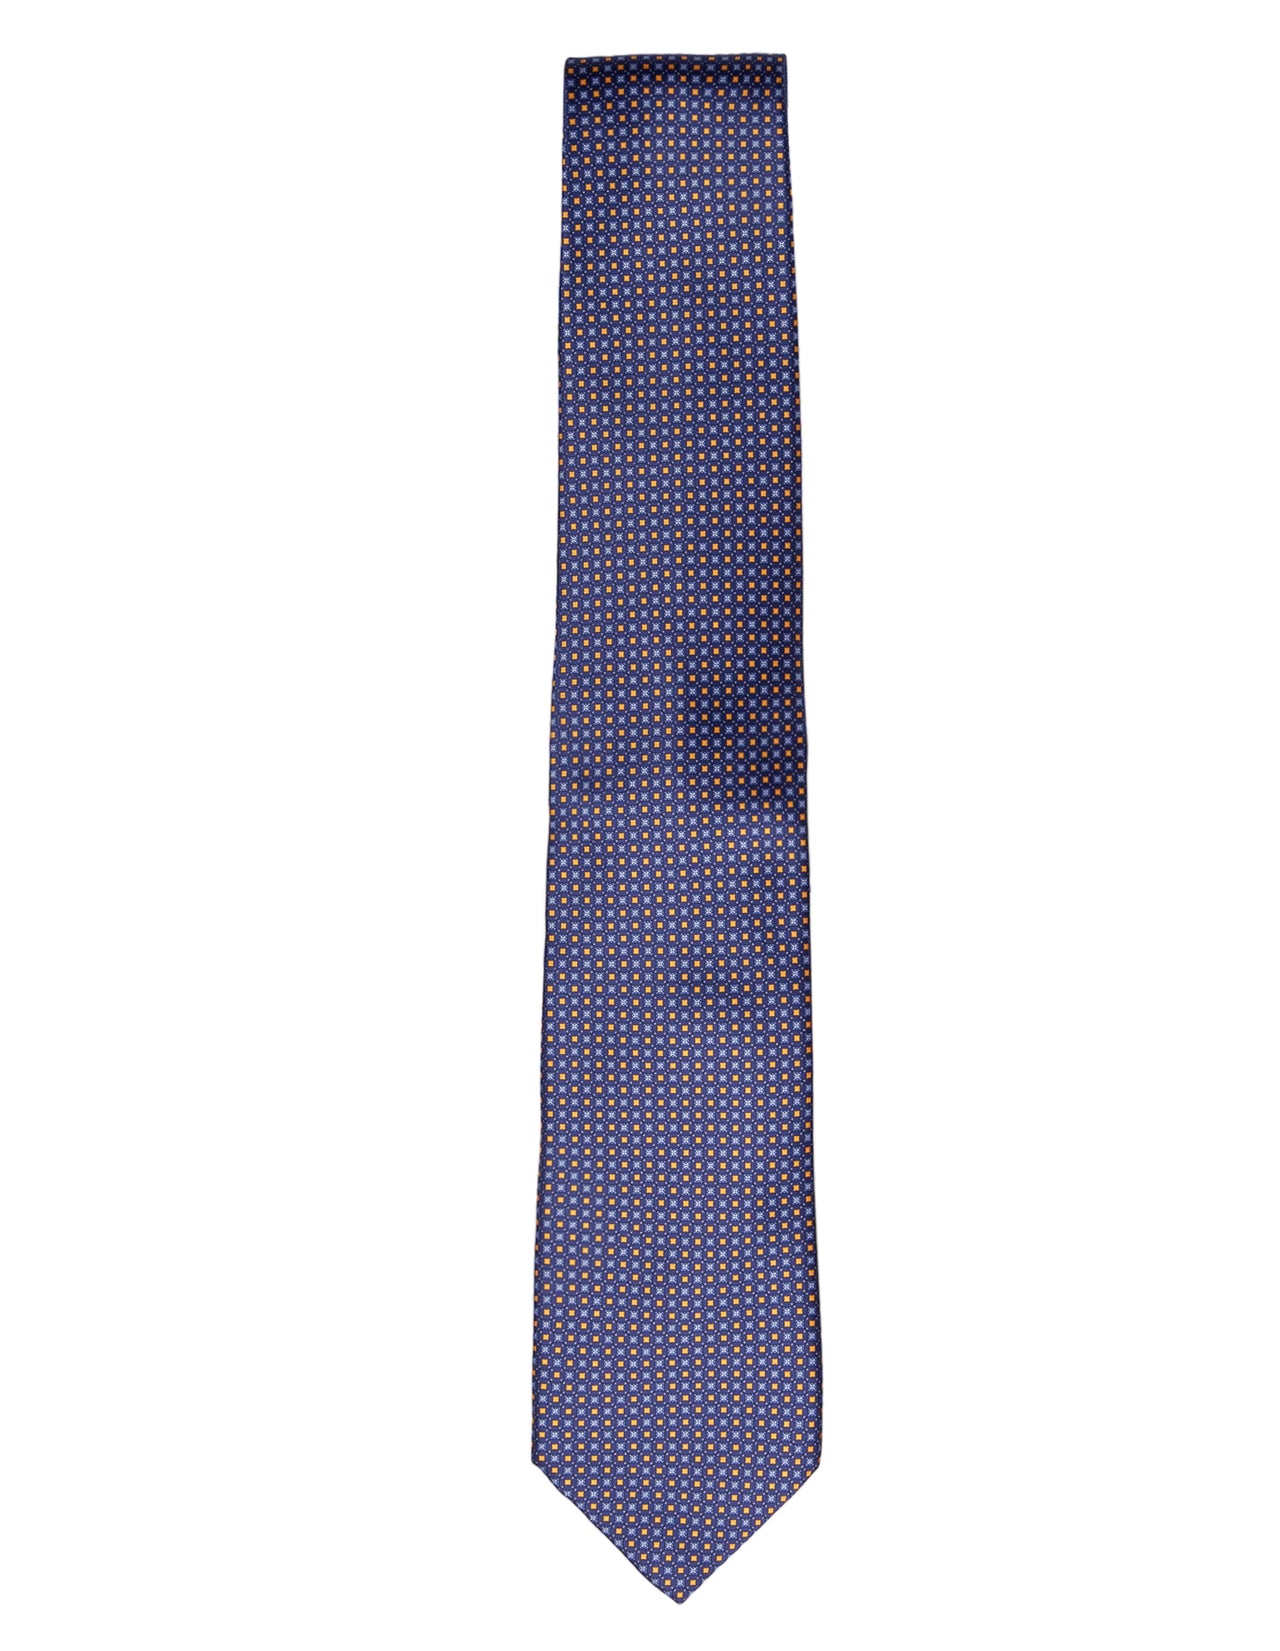 STEFANO RICCI Silk Tie & Pocket Square Set BLUE/YELLOW